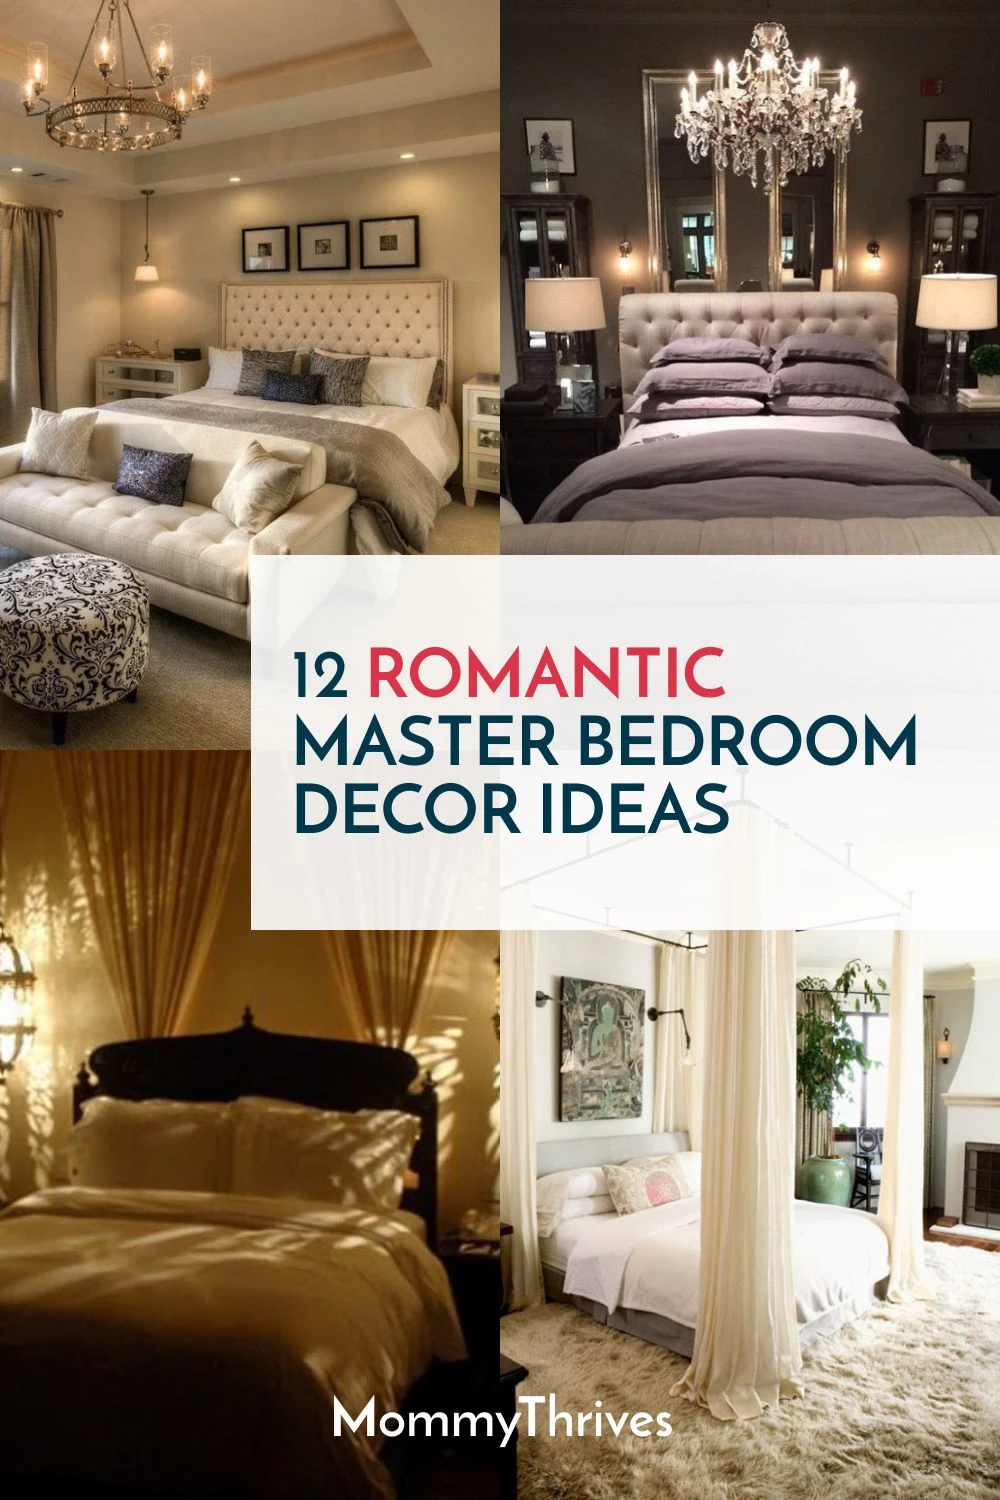 12 Beautiful Romantic Bedroom Ideas - MommyThrives